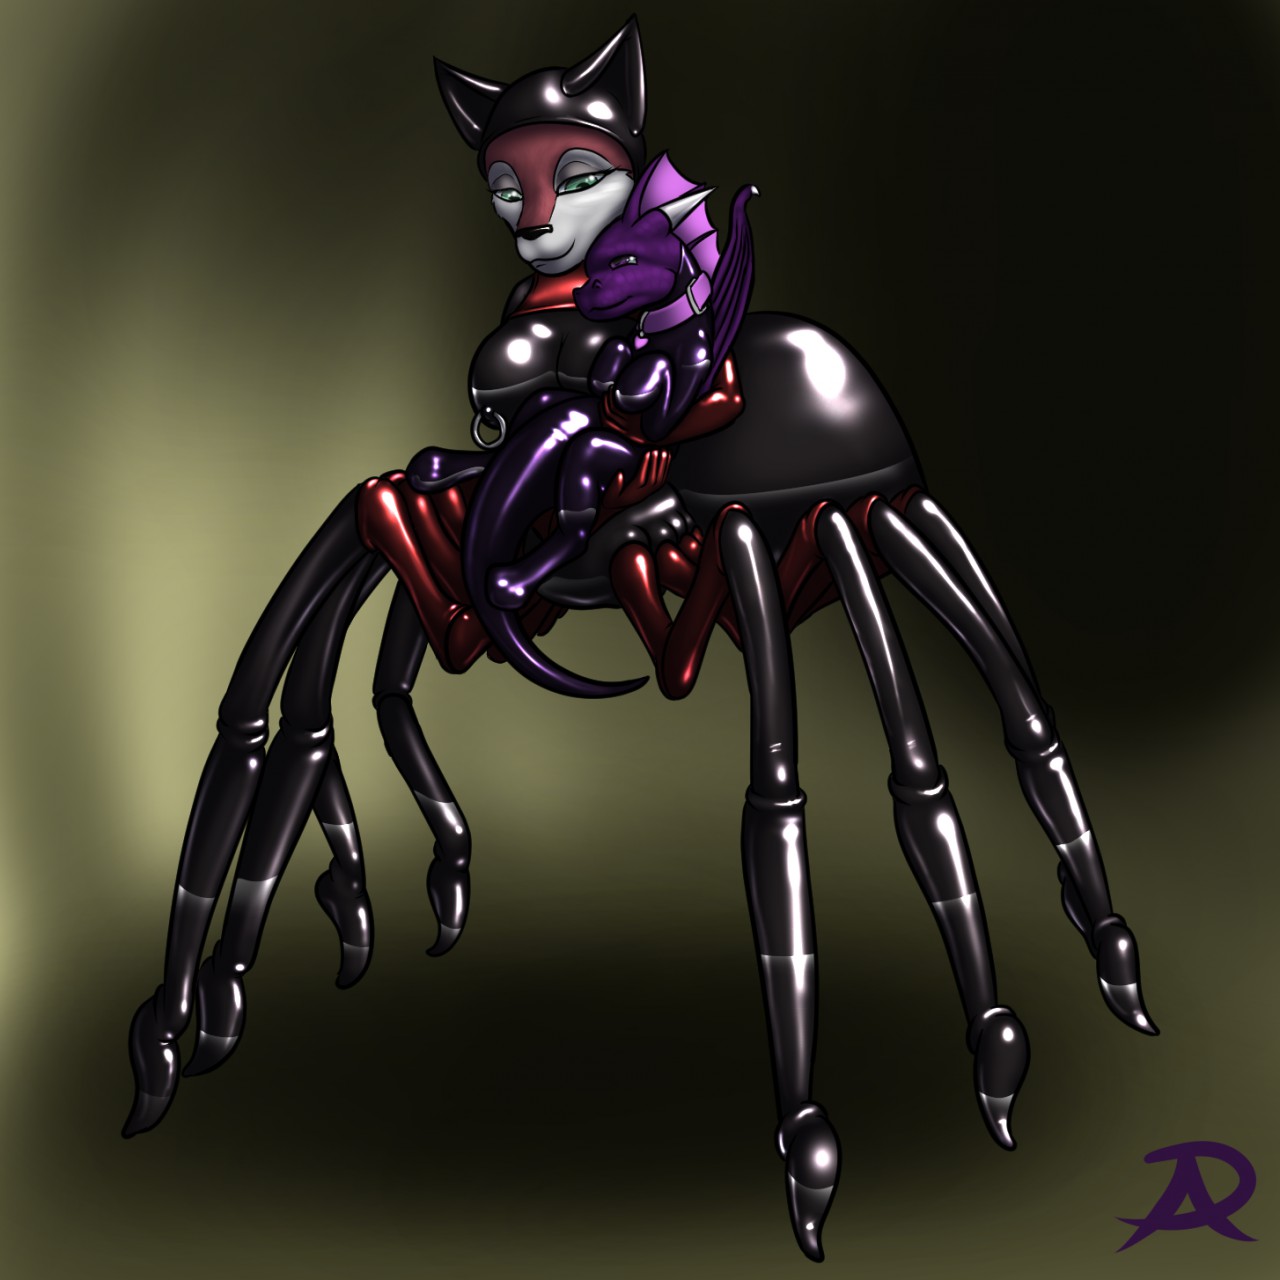 Streamathon: Spider Snuggles. 